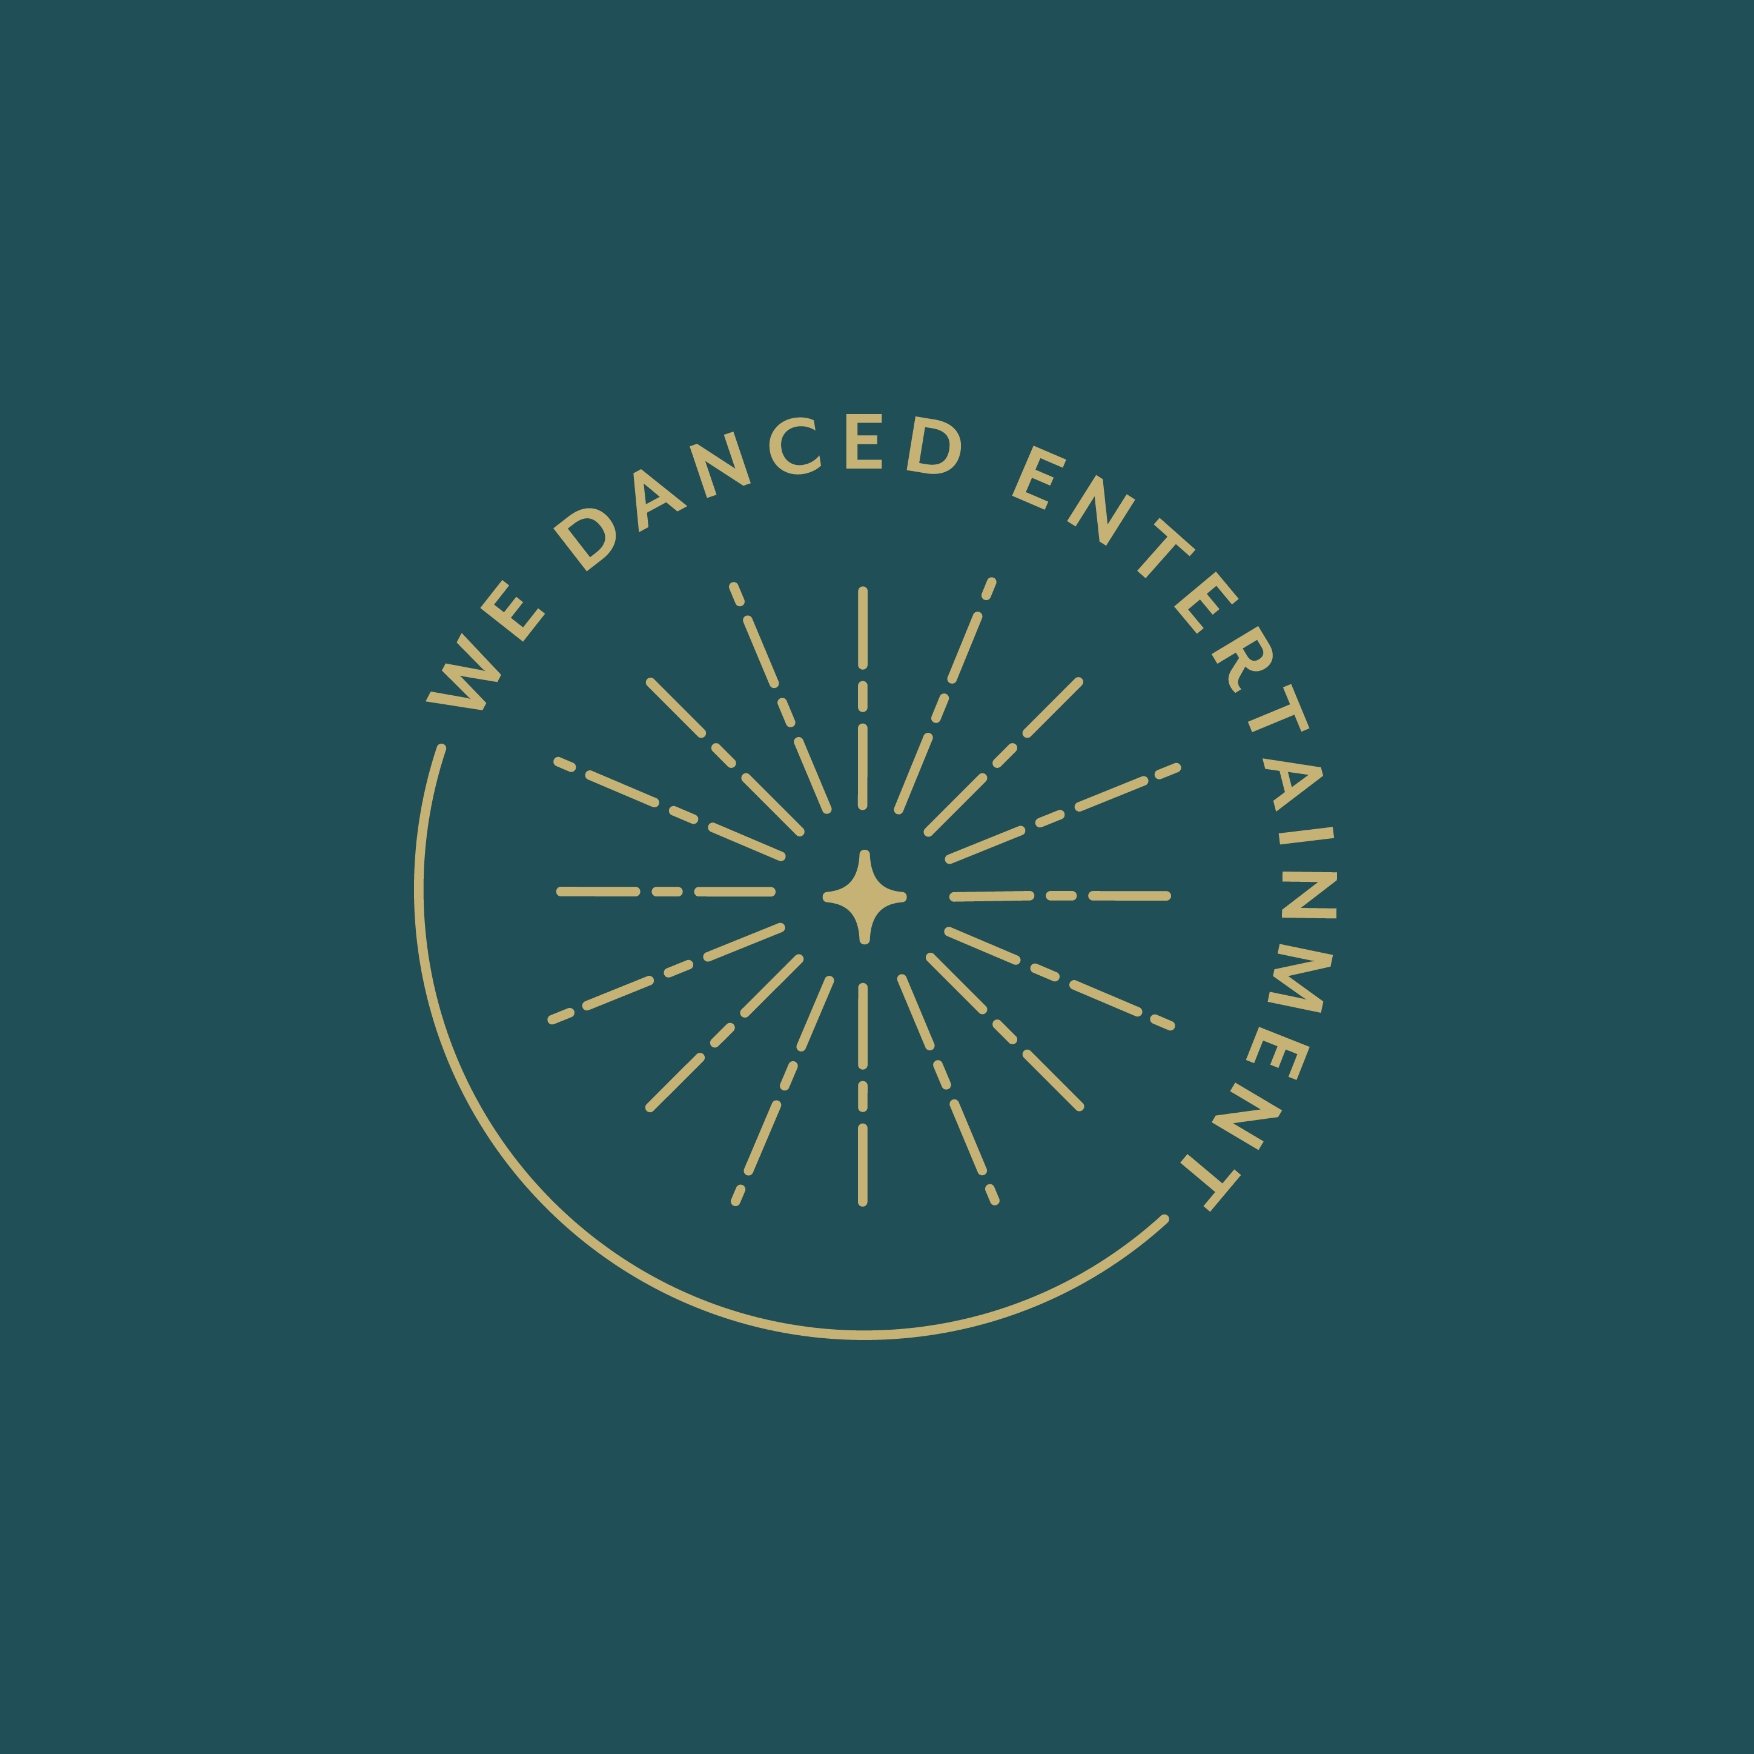 Moonstone+Creative+We+Danced+Wedding+Brand+Gold+Emblem+Logo+Design.jpg